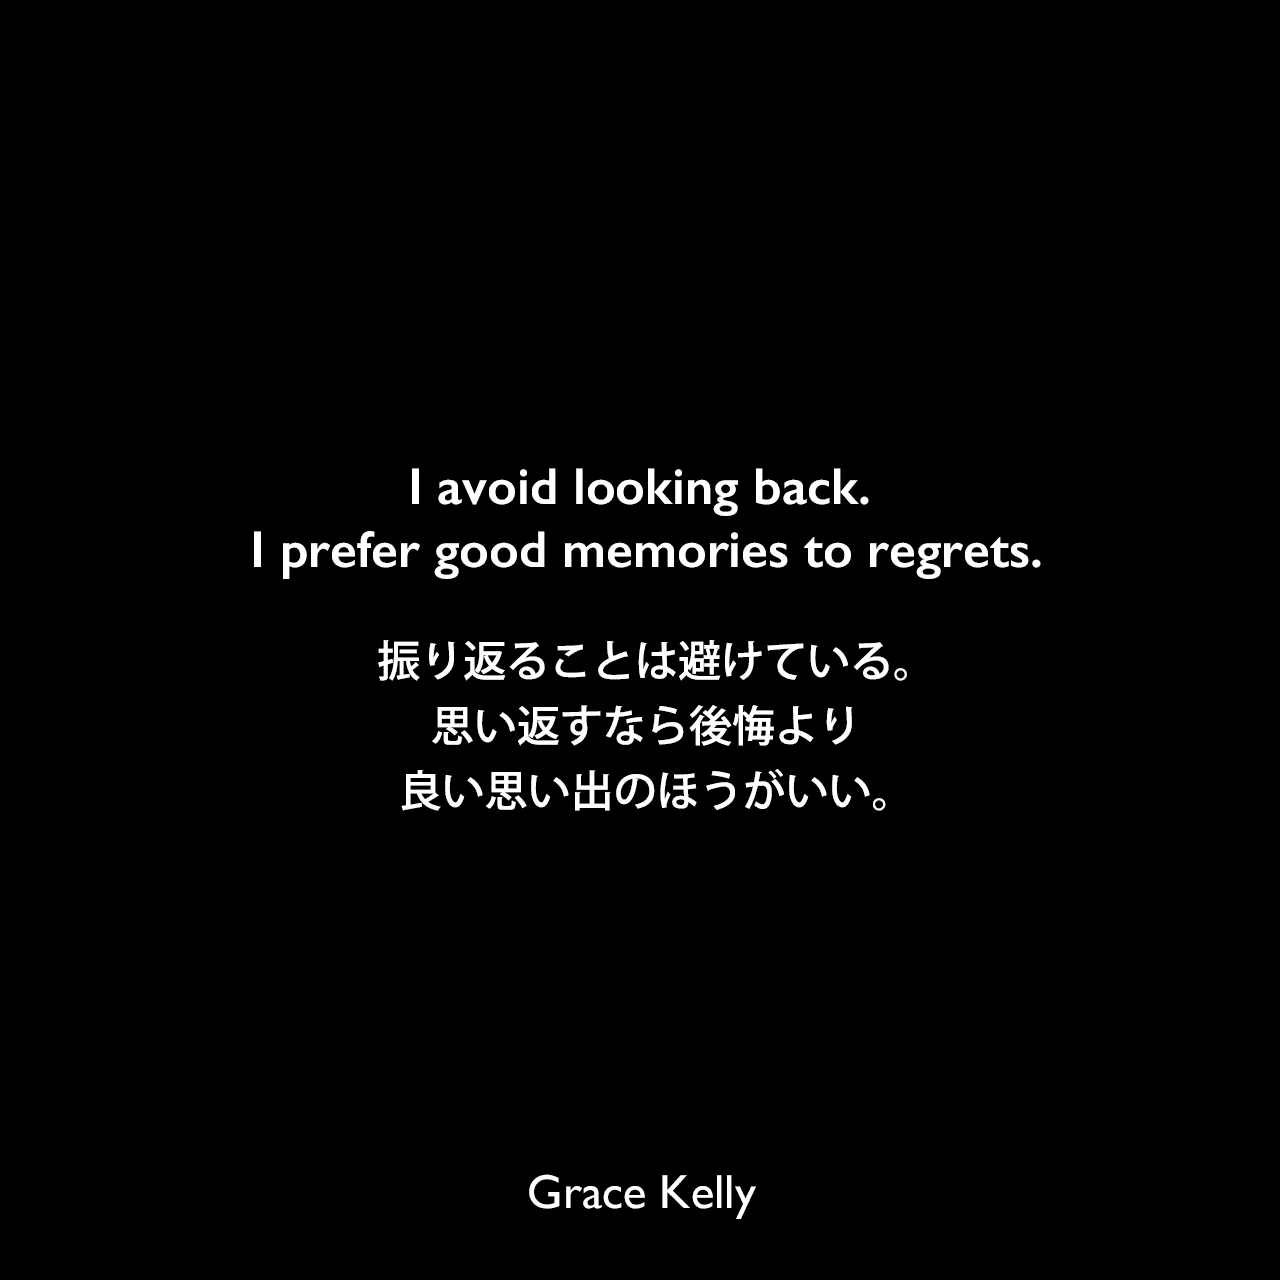 I avoid looking back. I prefer good memories to regrets.振り返ることは避けている。思い返すなら後悔より、良い思い出のほうがいい。Grace Kelly